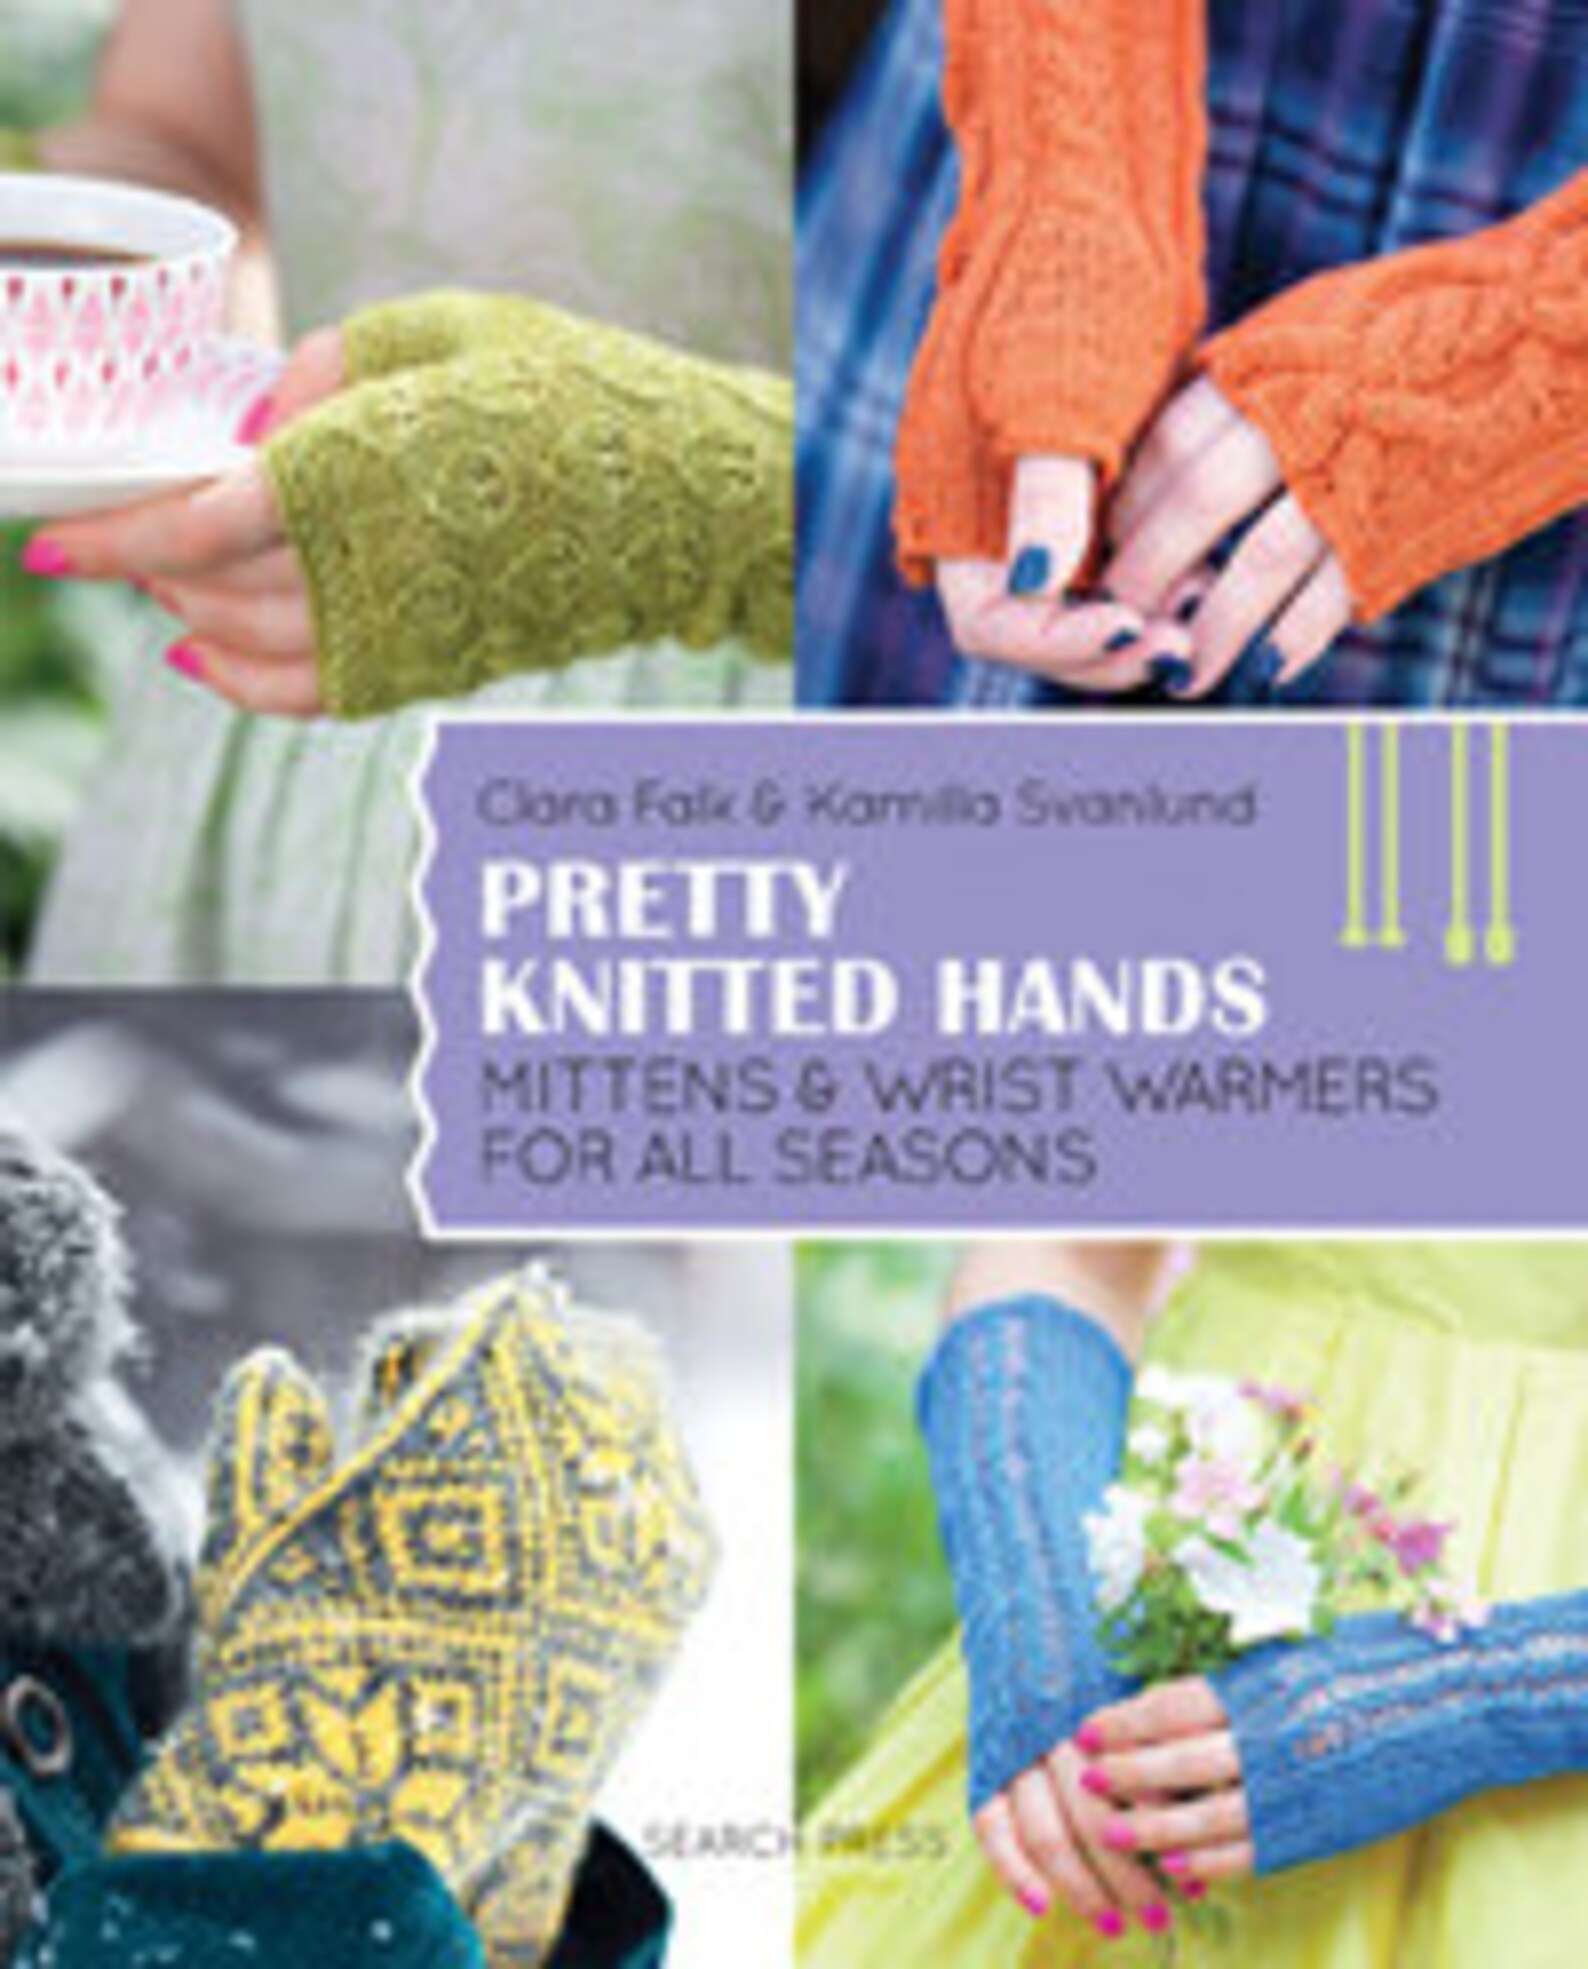 Knitting hands